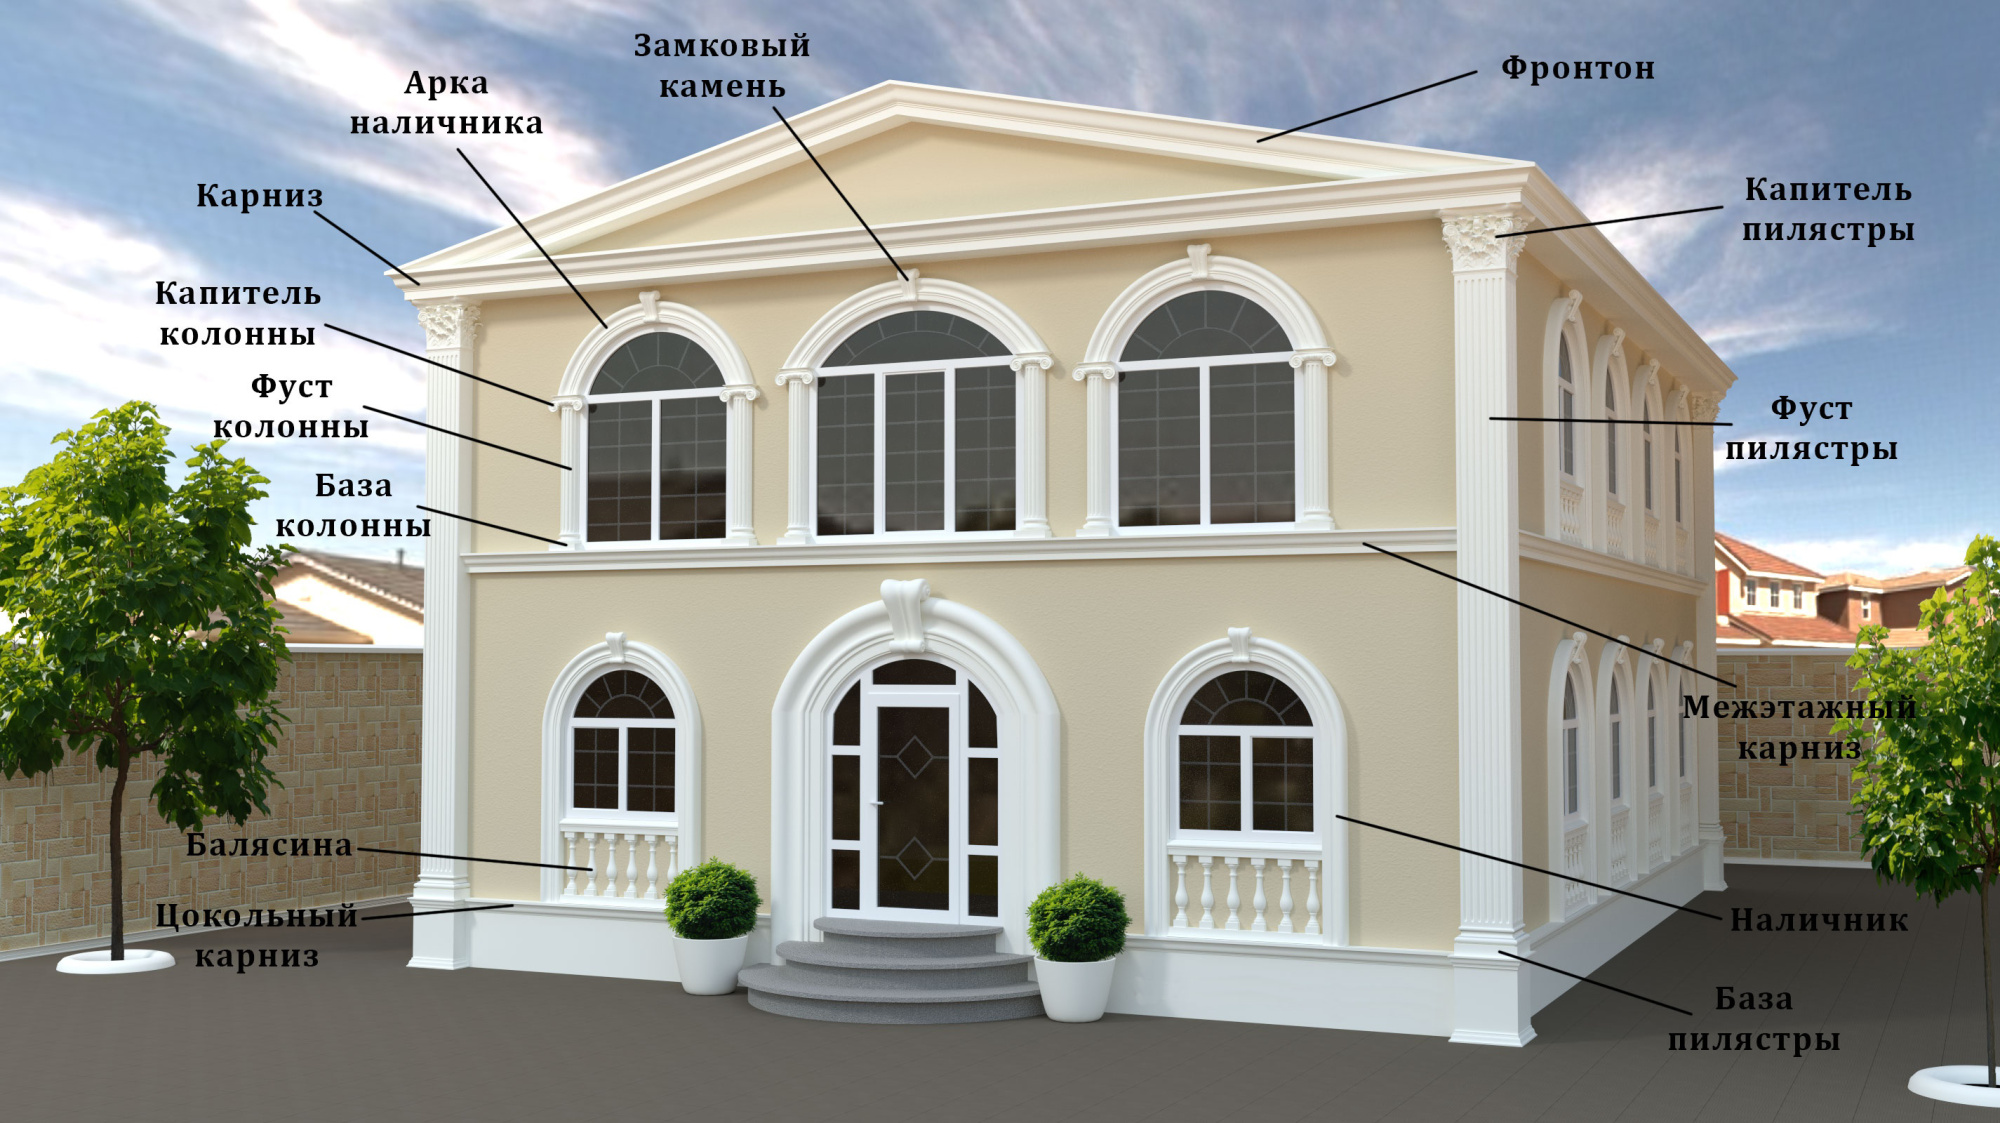 Схема архитектурных деталей фасада здания.jpg